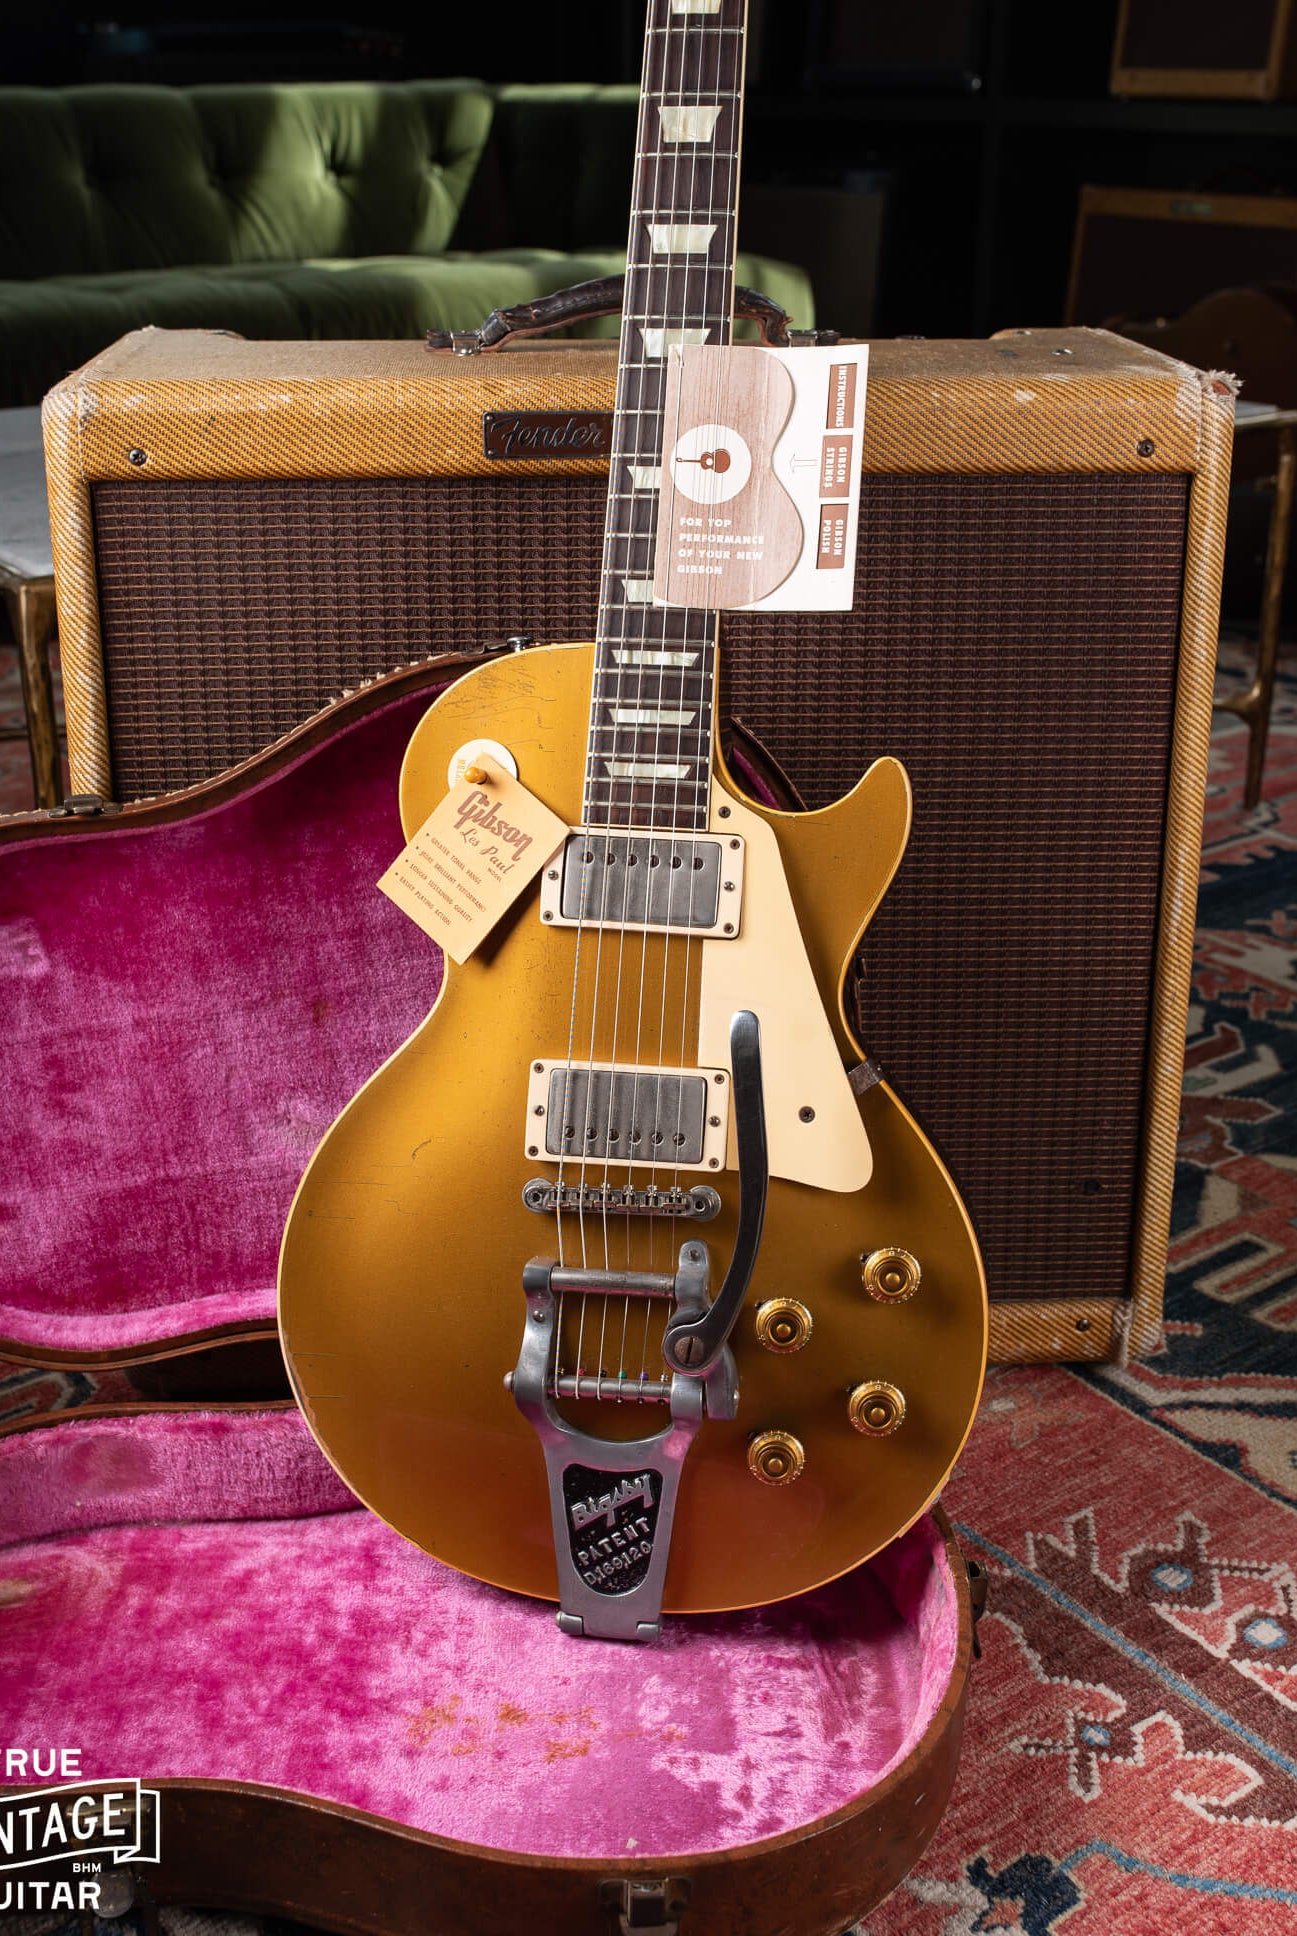 Gibson Les Paul gold 1957-1958 goldtop guitar with humbucker pickups